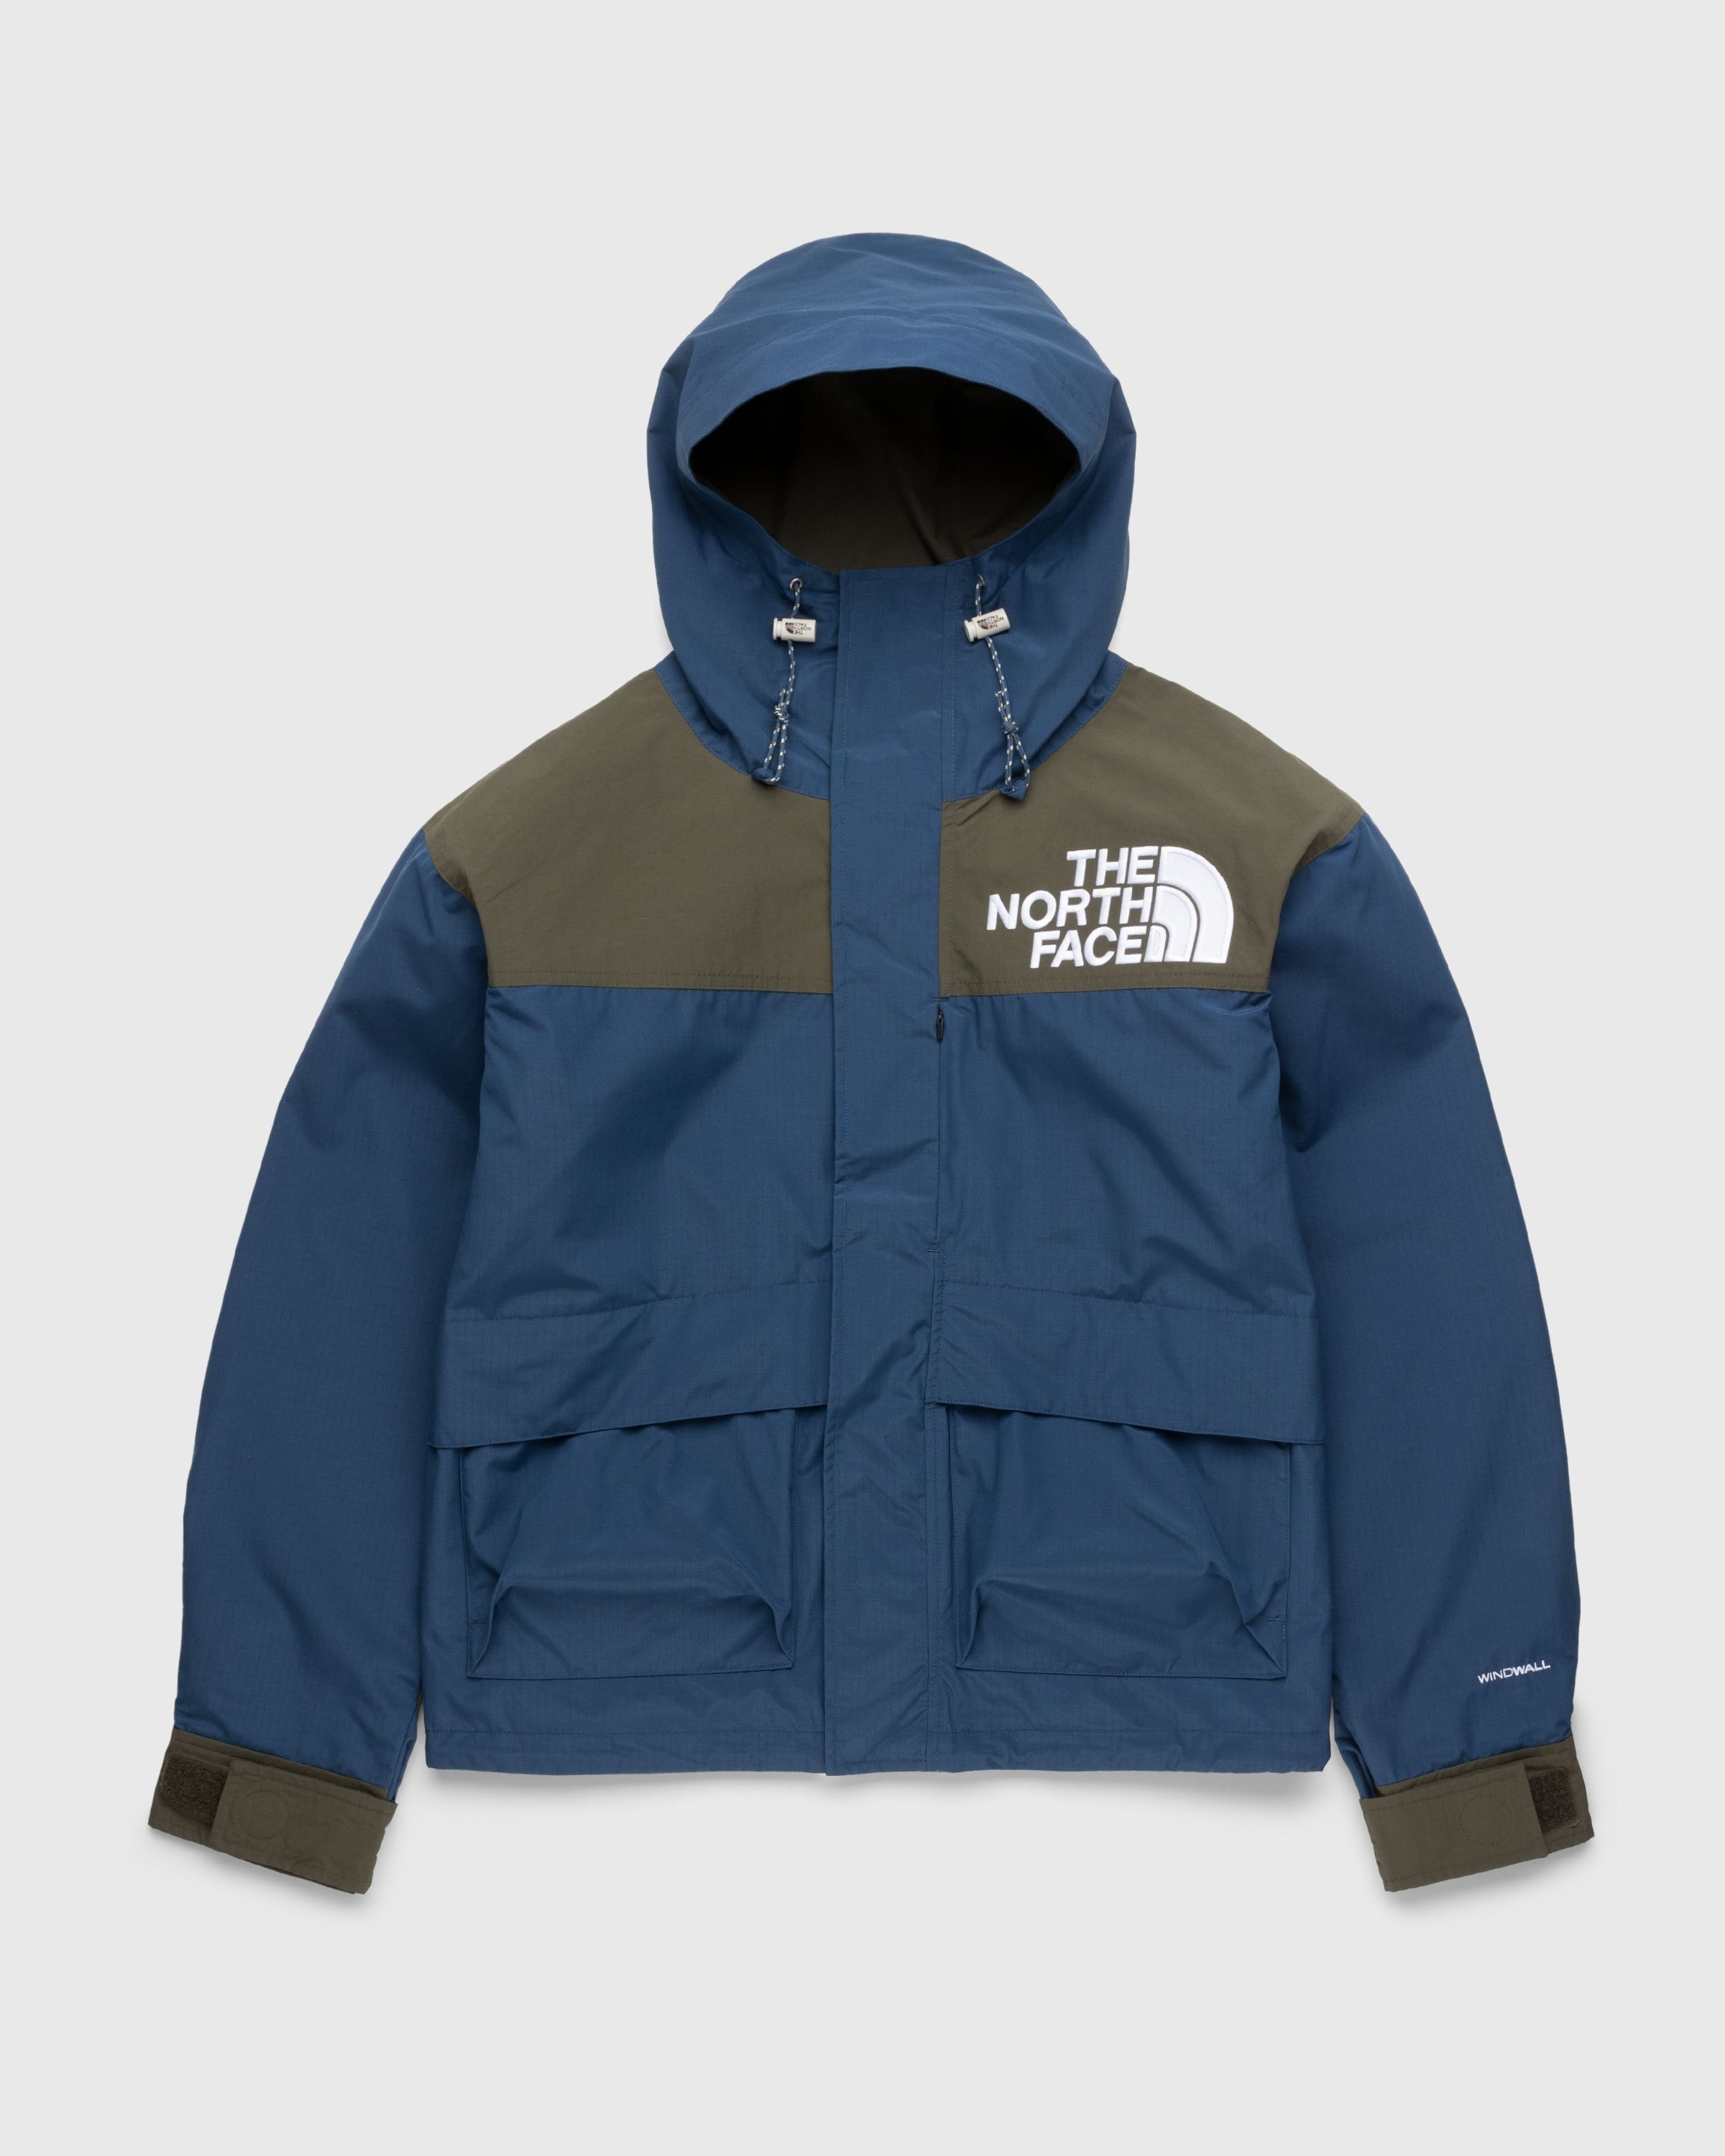 Bloesem Thuisland werkgelegenheid The North Face – '86 Low-Fi Hi-Tek Mountain Jacket Shady Blue/New Taupe  Green | Highsnobiety Shop